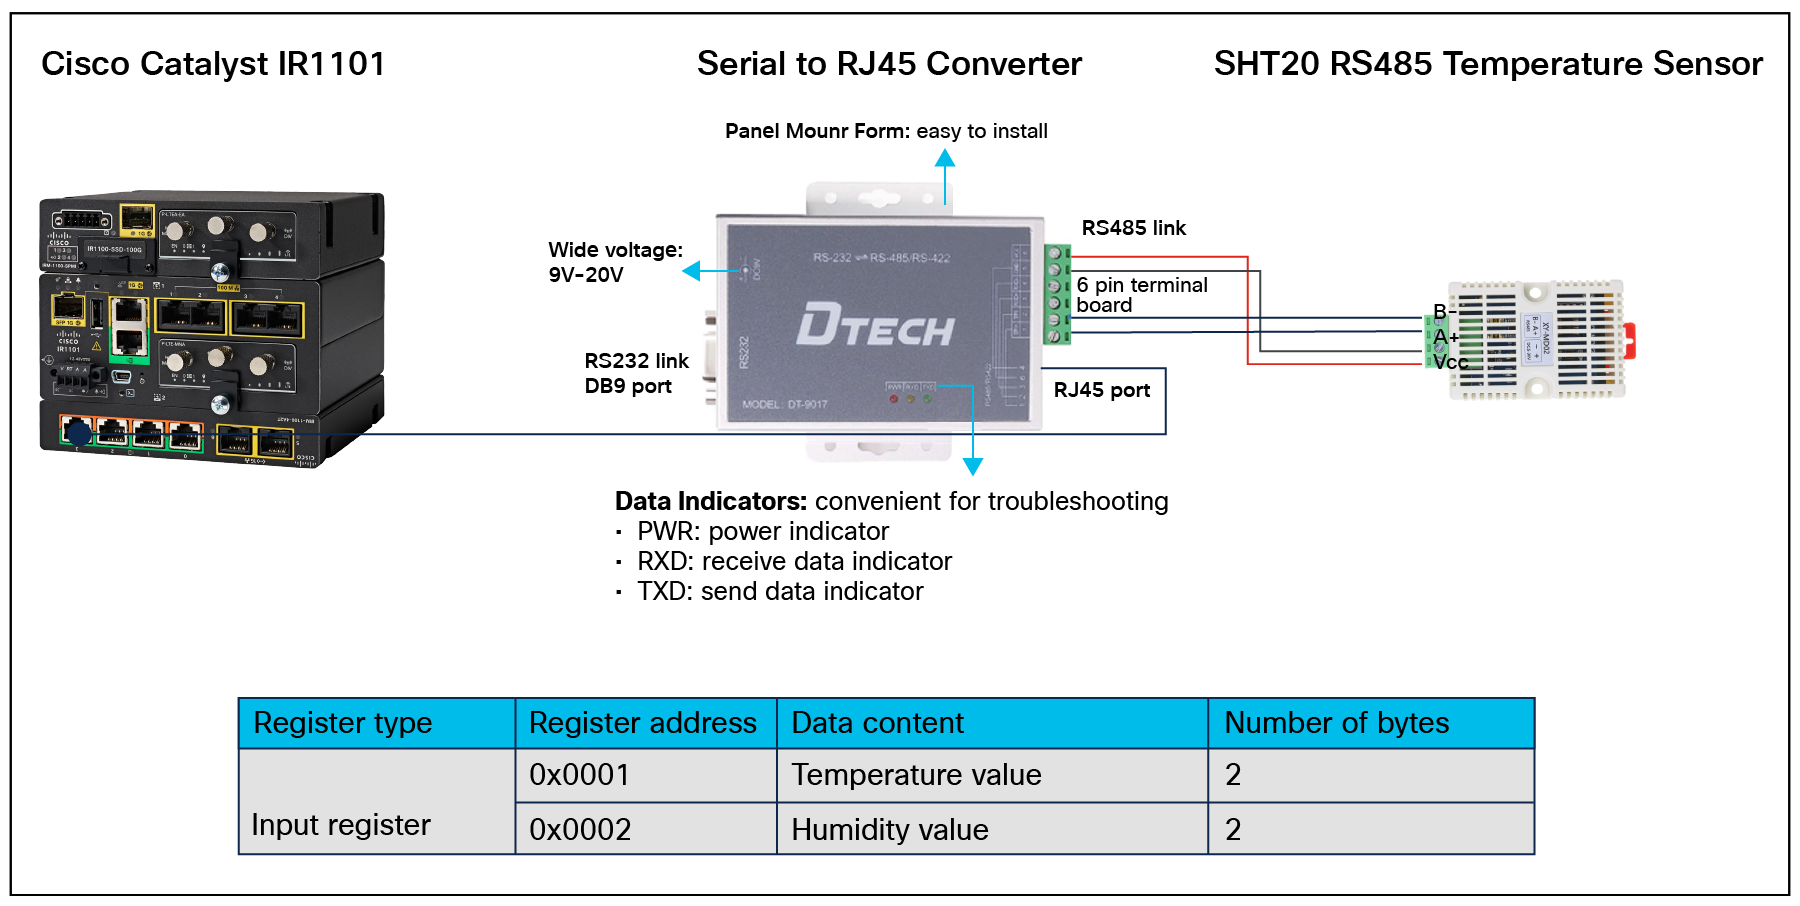 Example implementation using the SHT20 temperature sensor